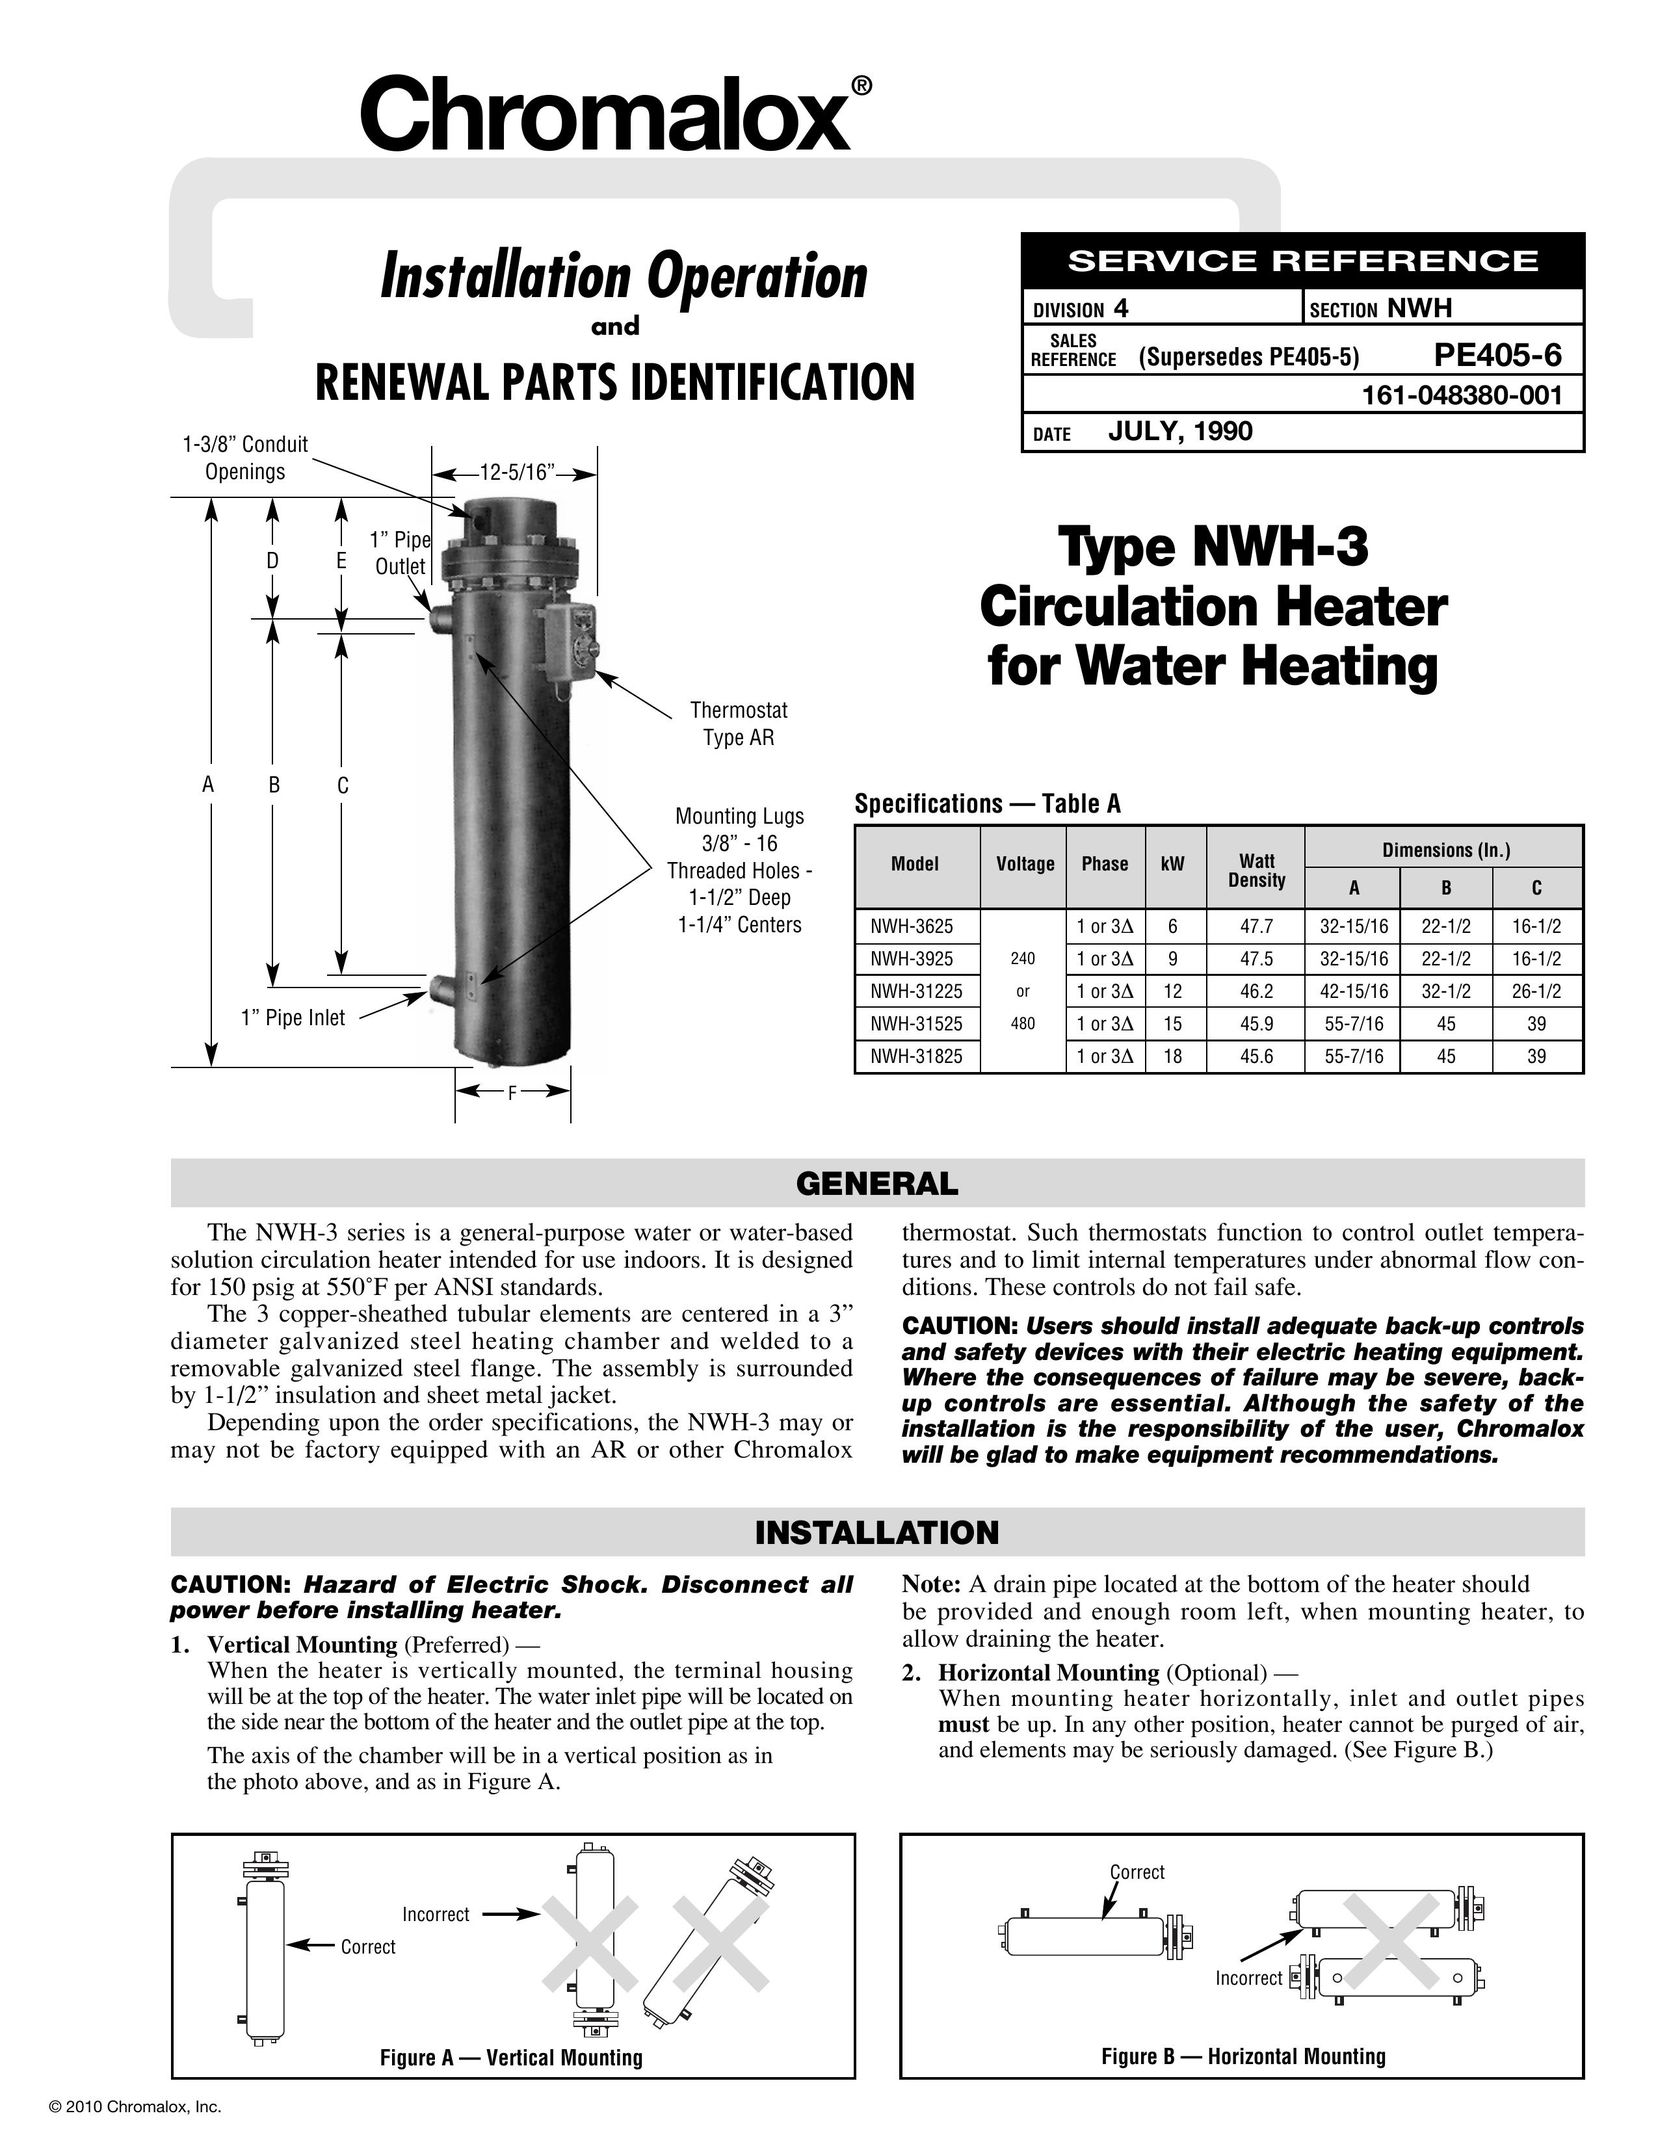 Chromalox NWH-3625 Water Heater User Manual